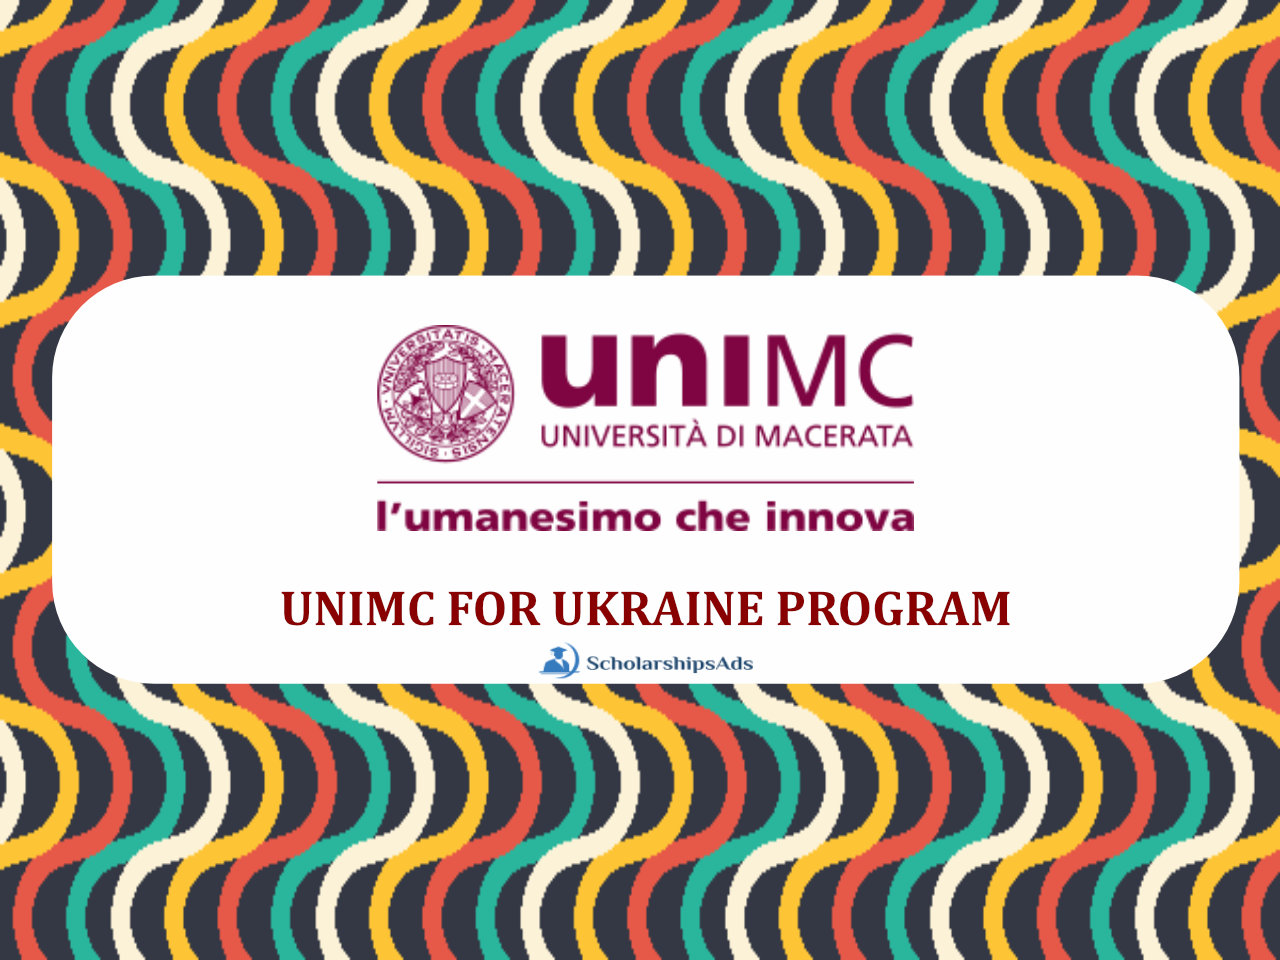 UNIMC Scholarships.